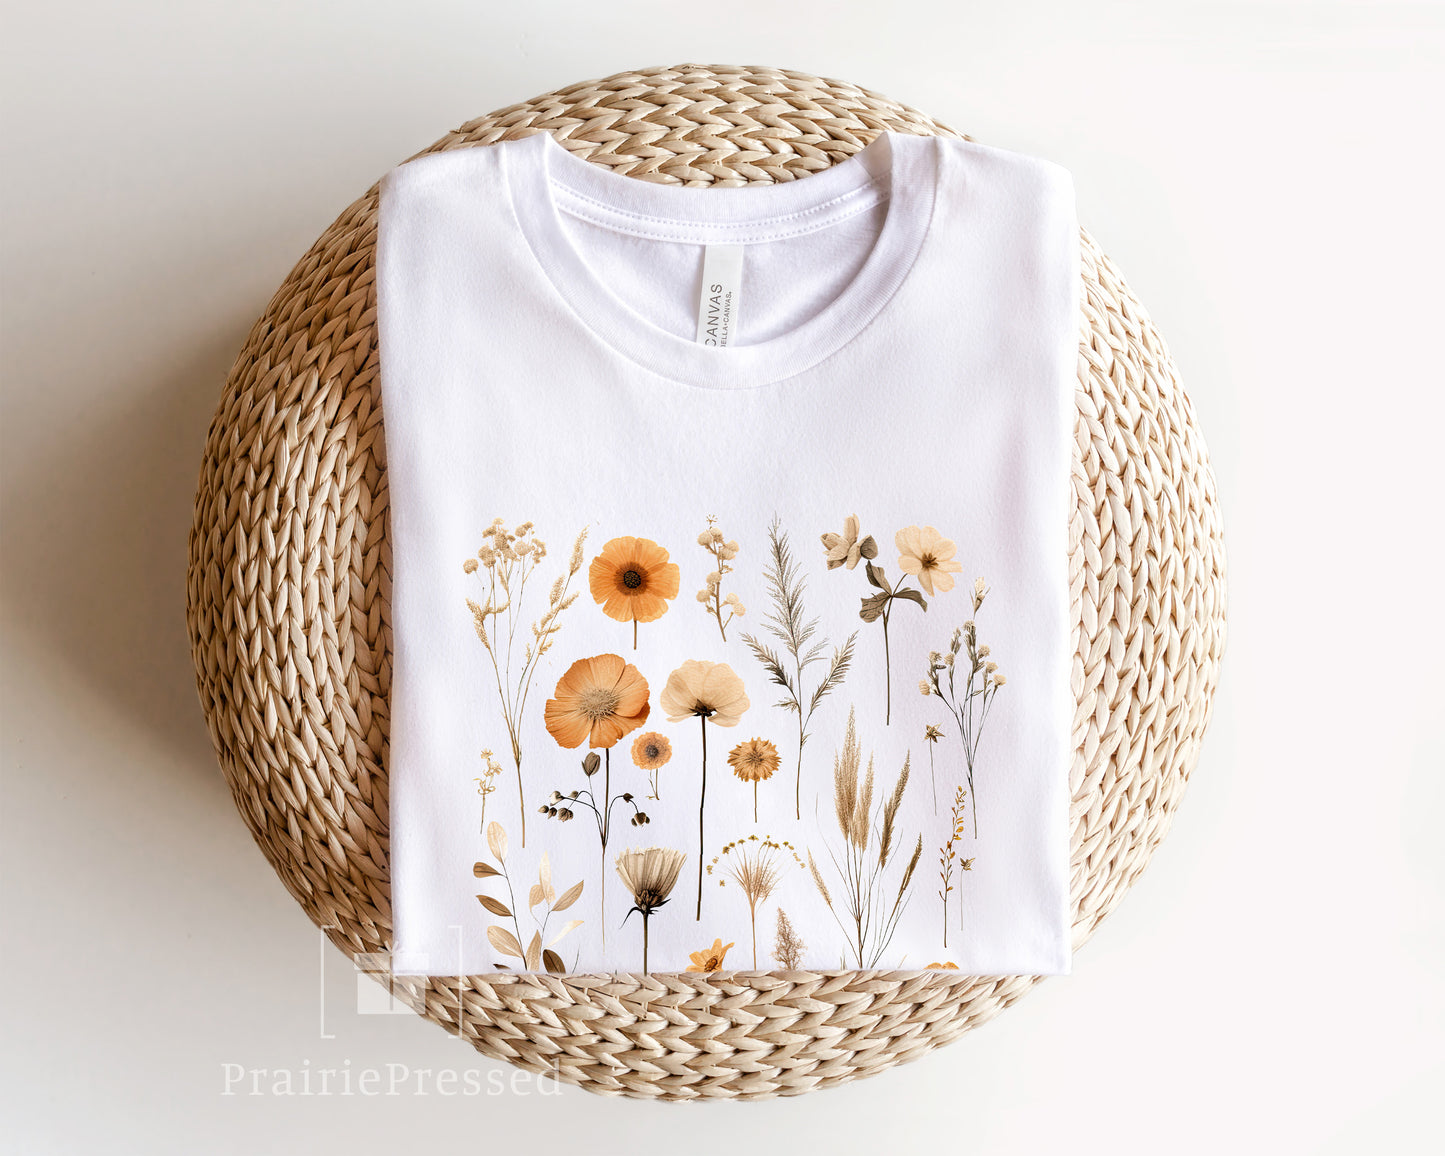 Pressed Wildflowers Peach and Orange tones T Shirt